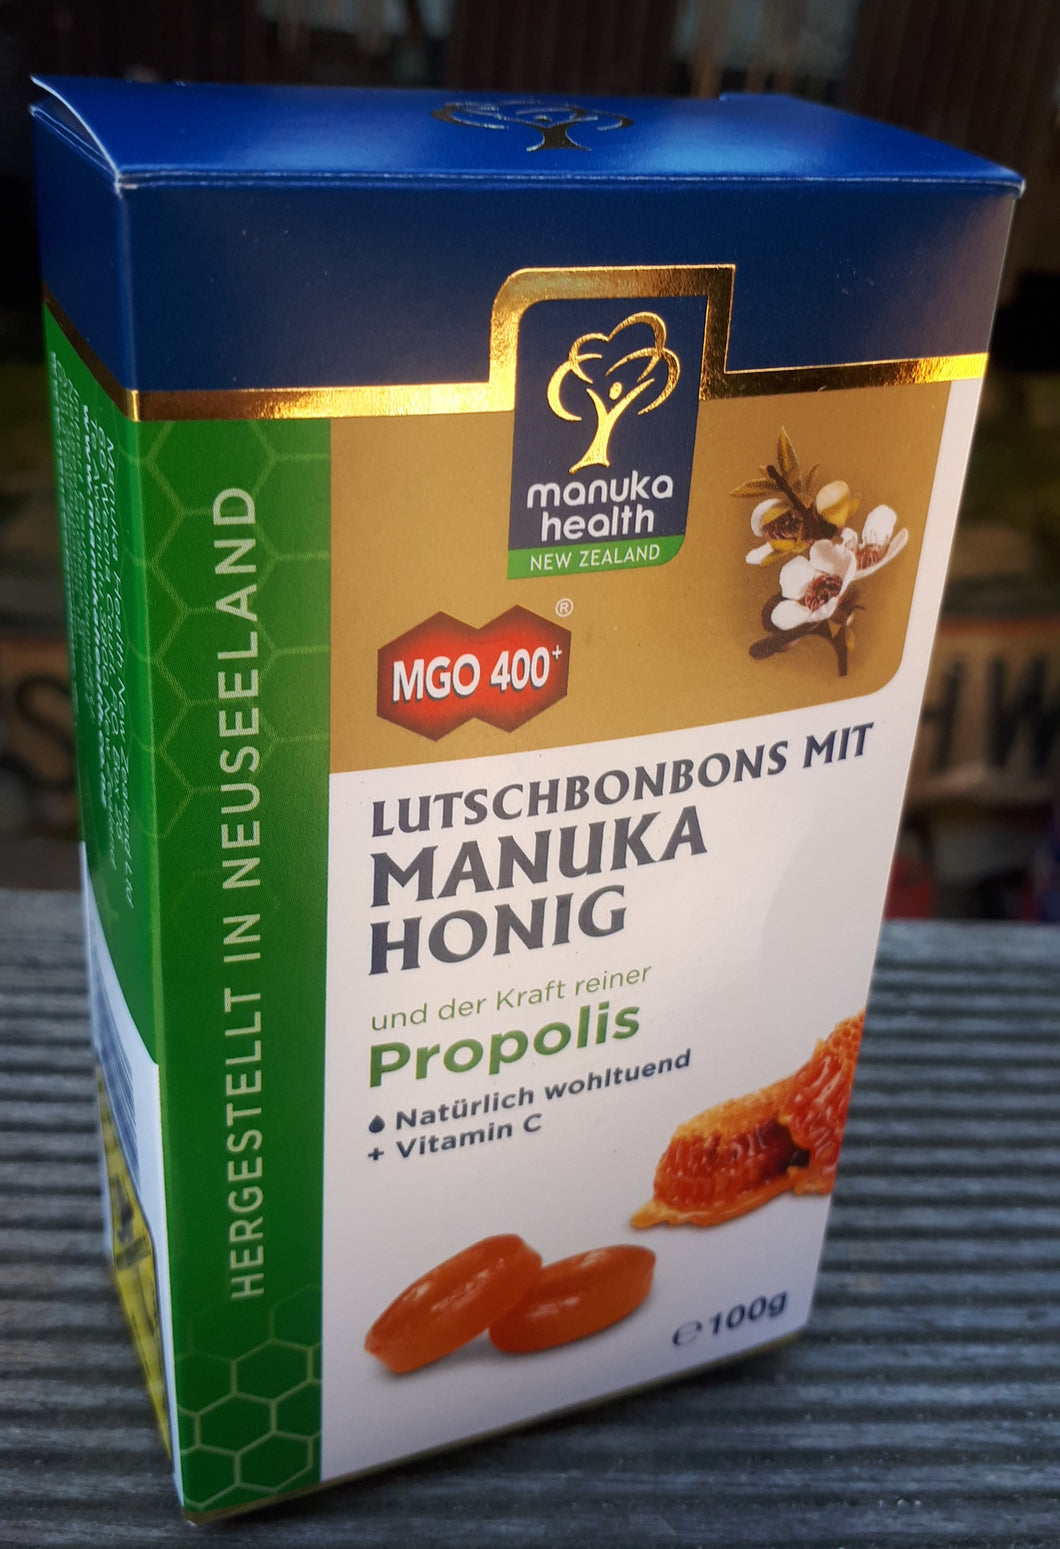 Manuka Honig Lutsch Bonbons Propolis - wohltuend im Hals ! *